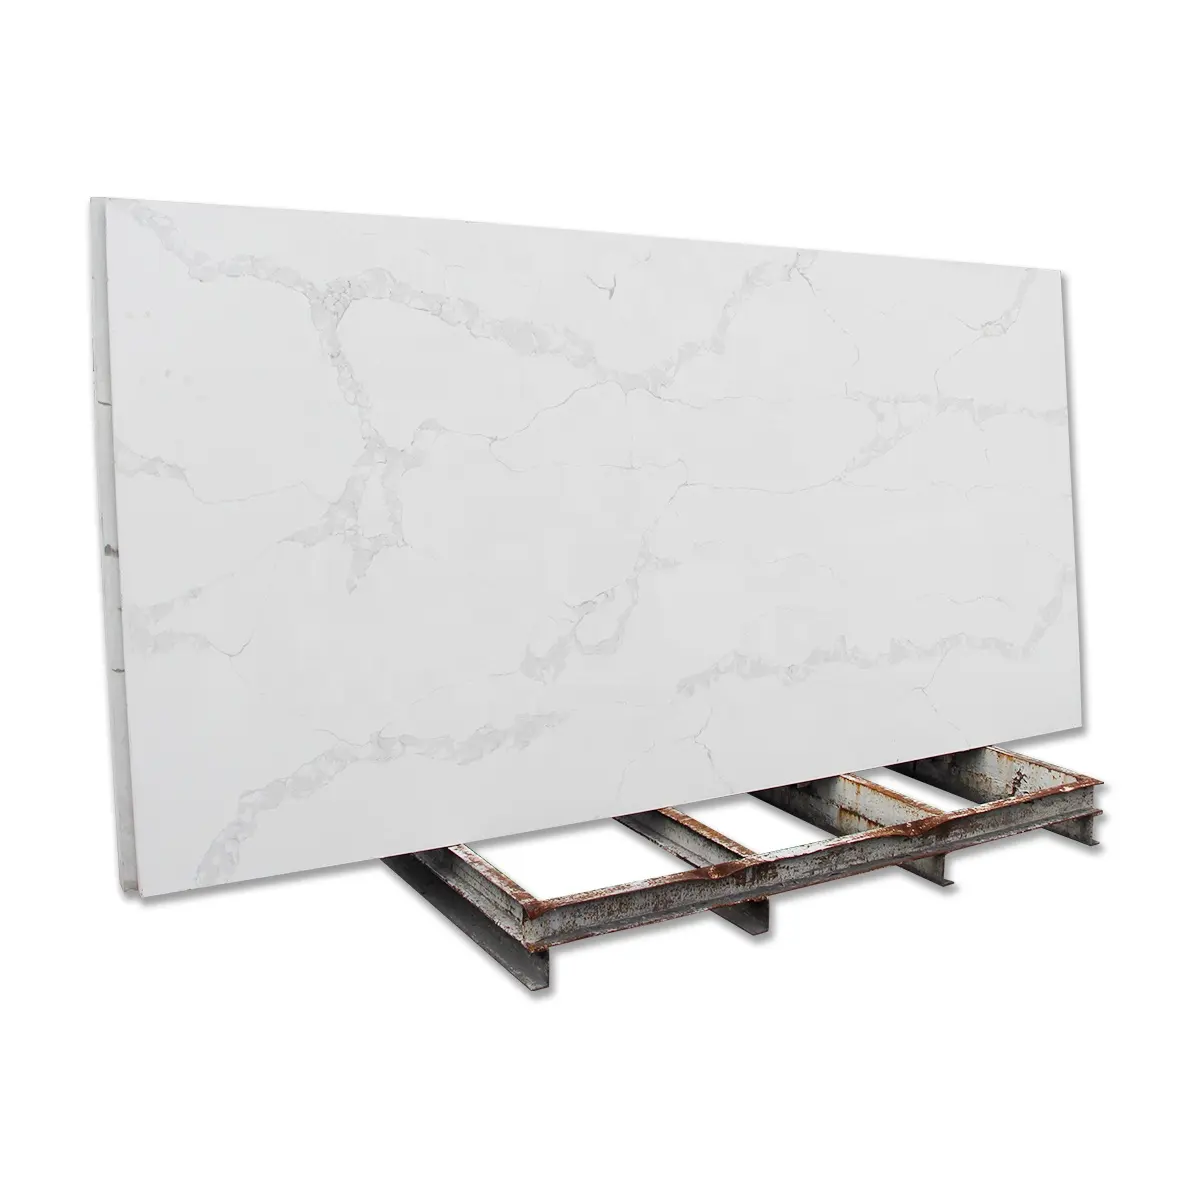 Popular White Quartz Reconstituted Stone For Kitchen Countertop